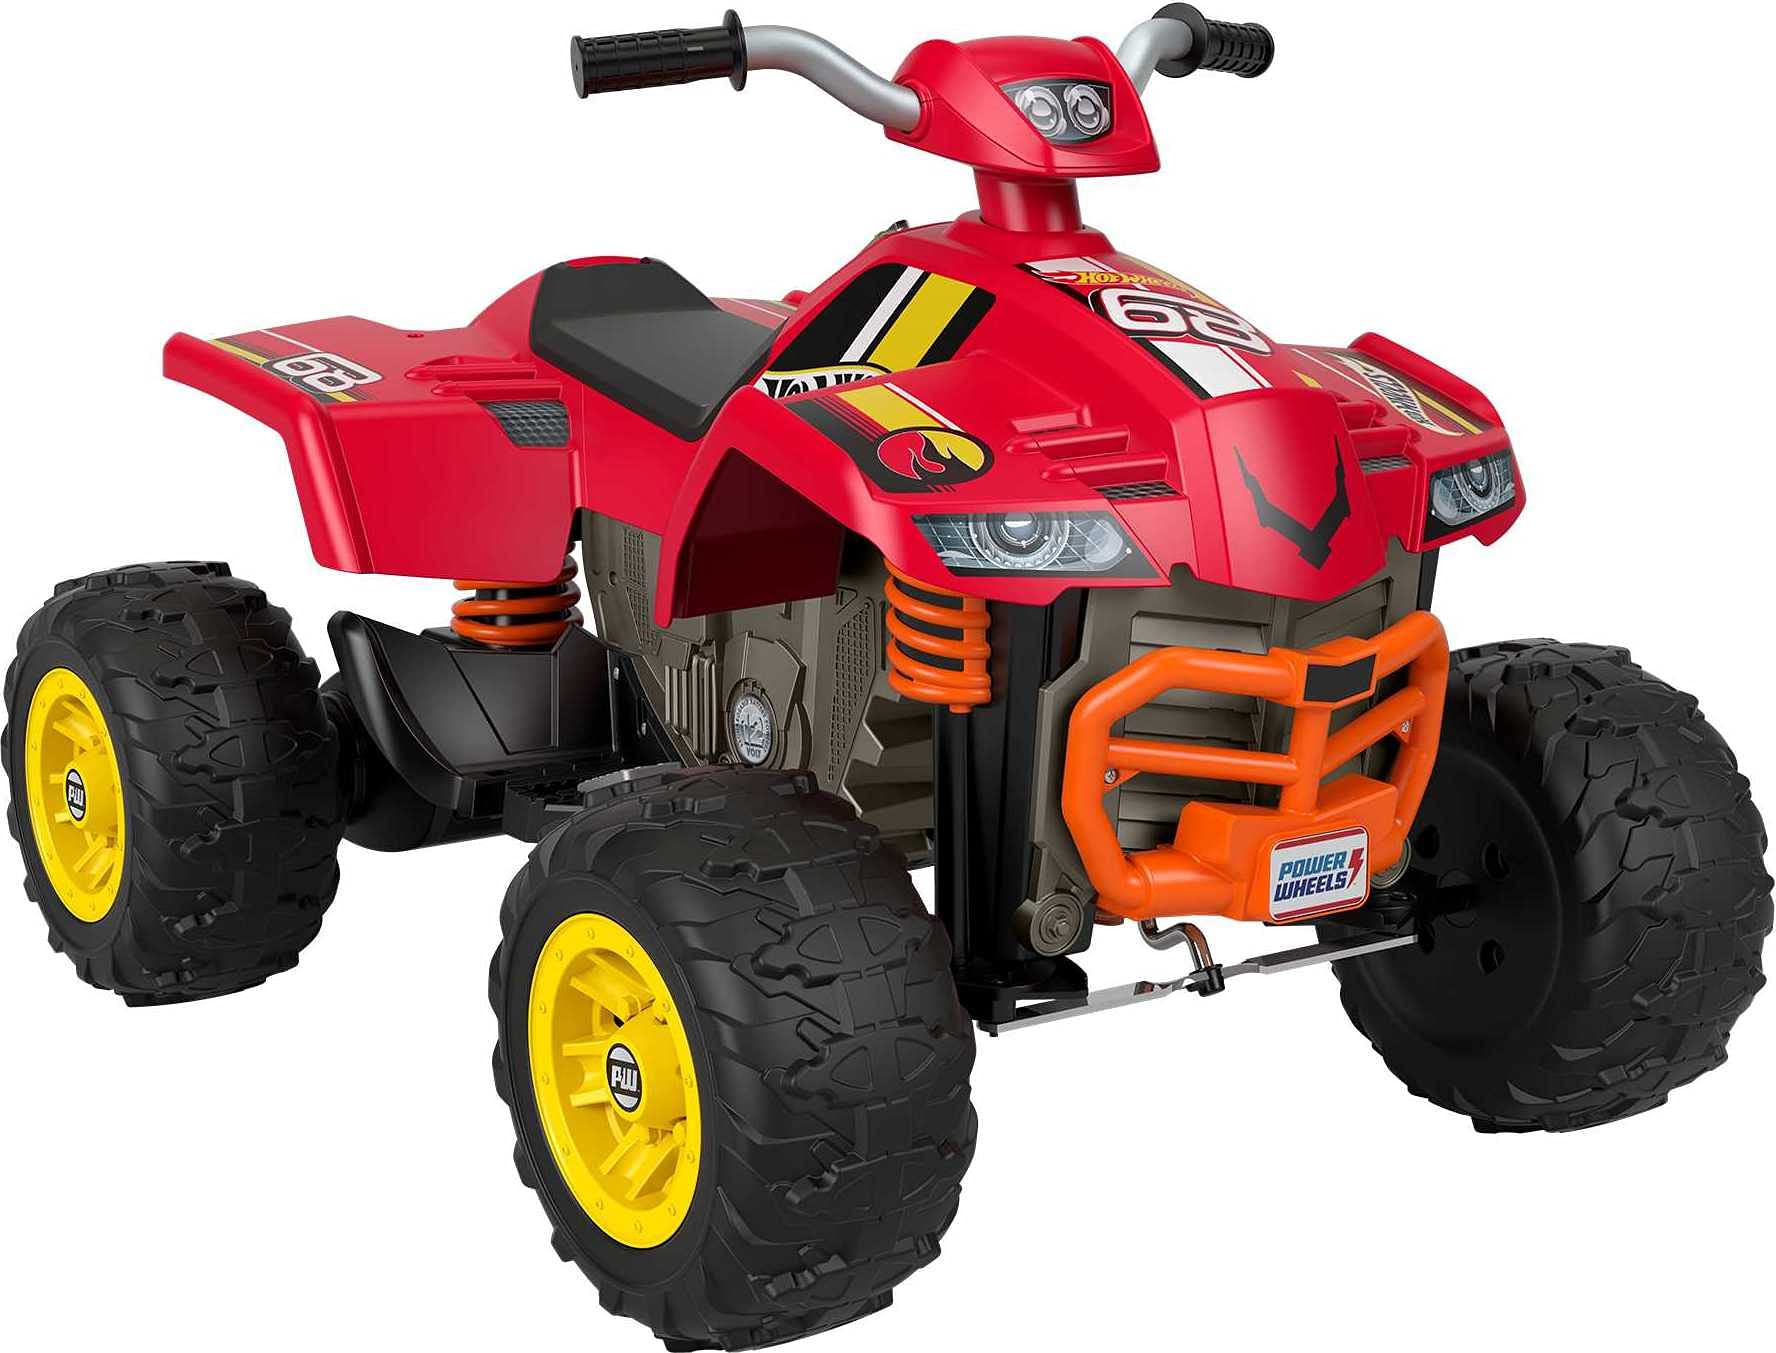 Power Wheels Hot Wheels Racing ATV Ride-On Toy